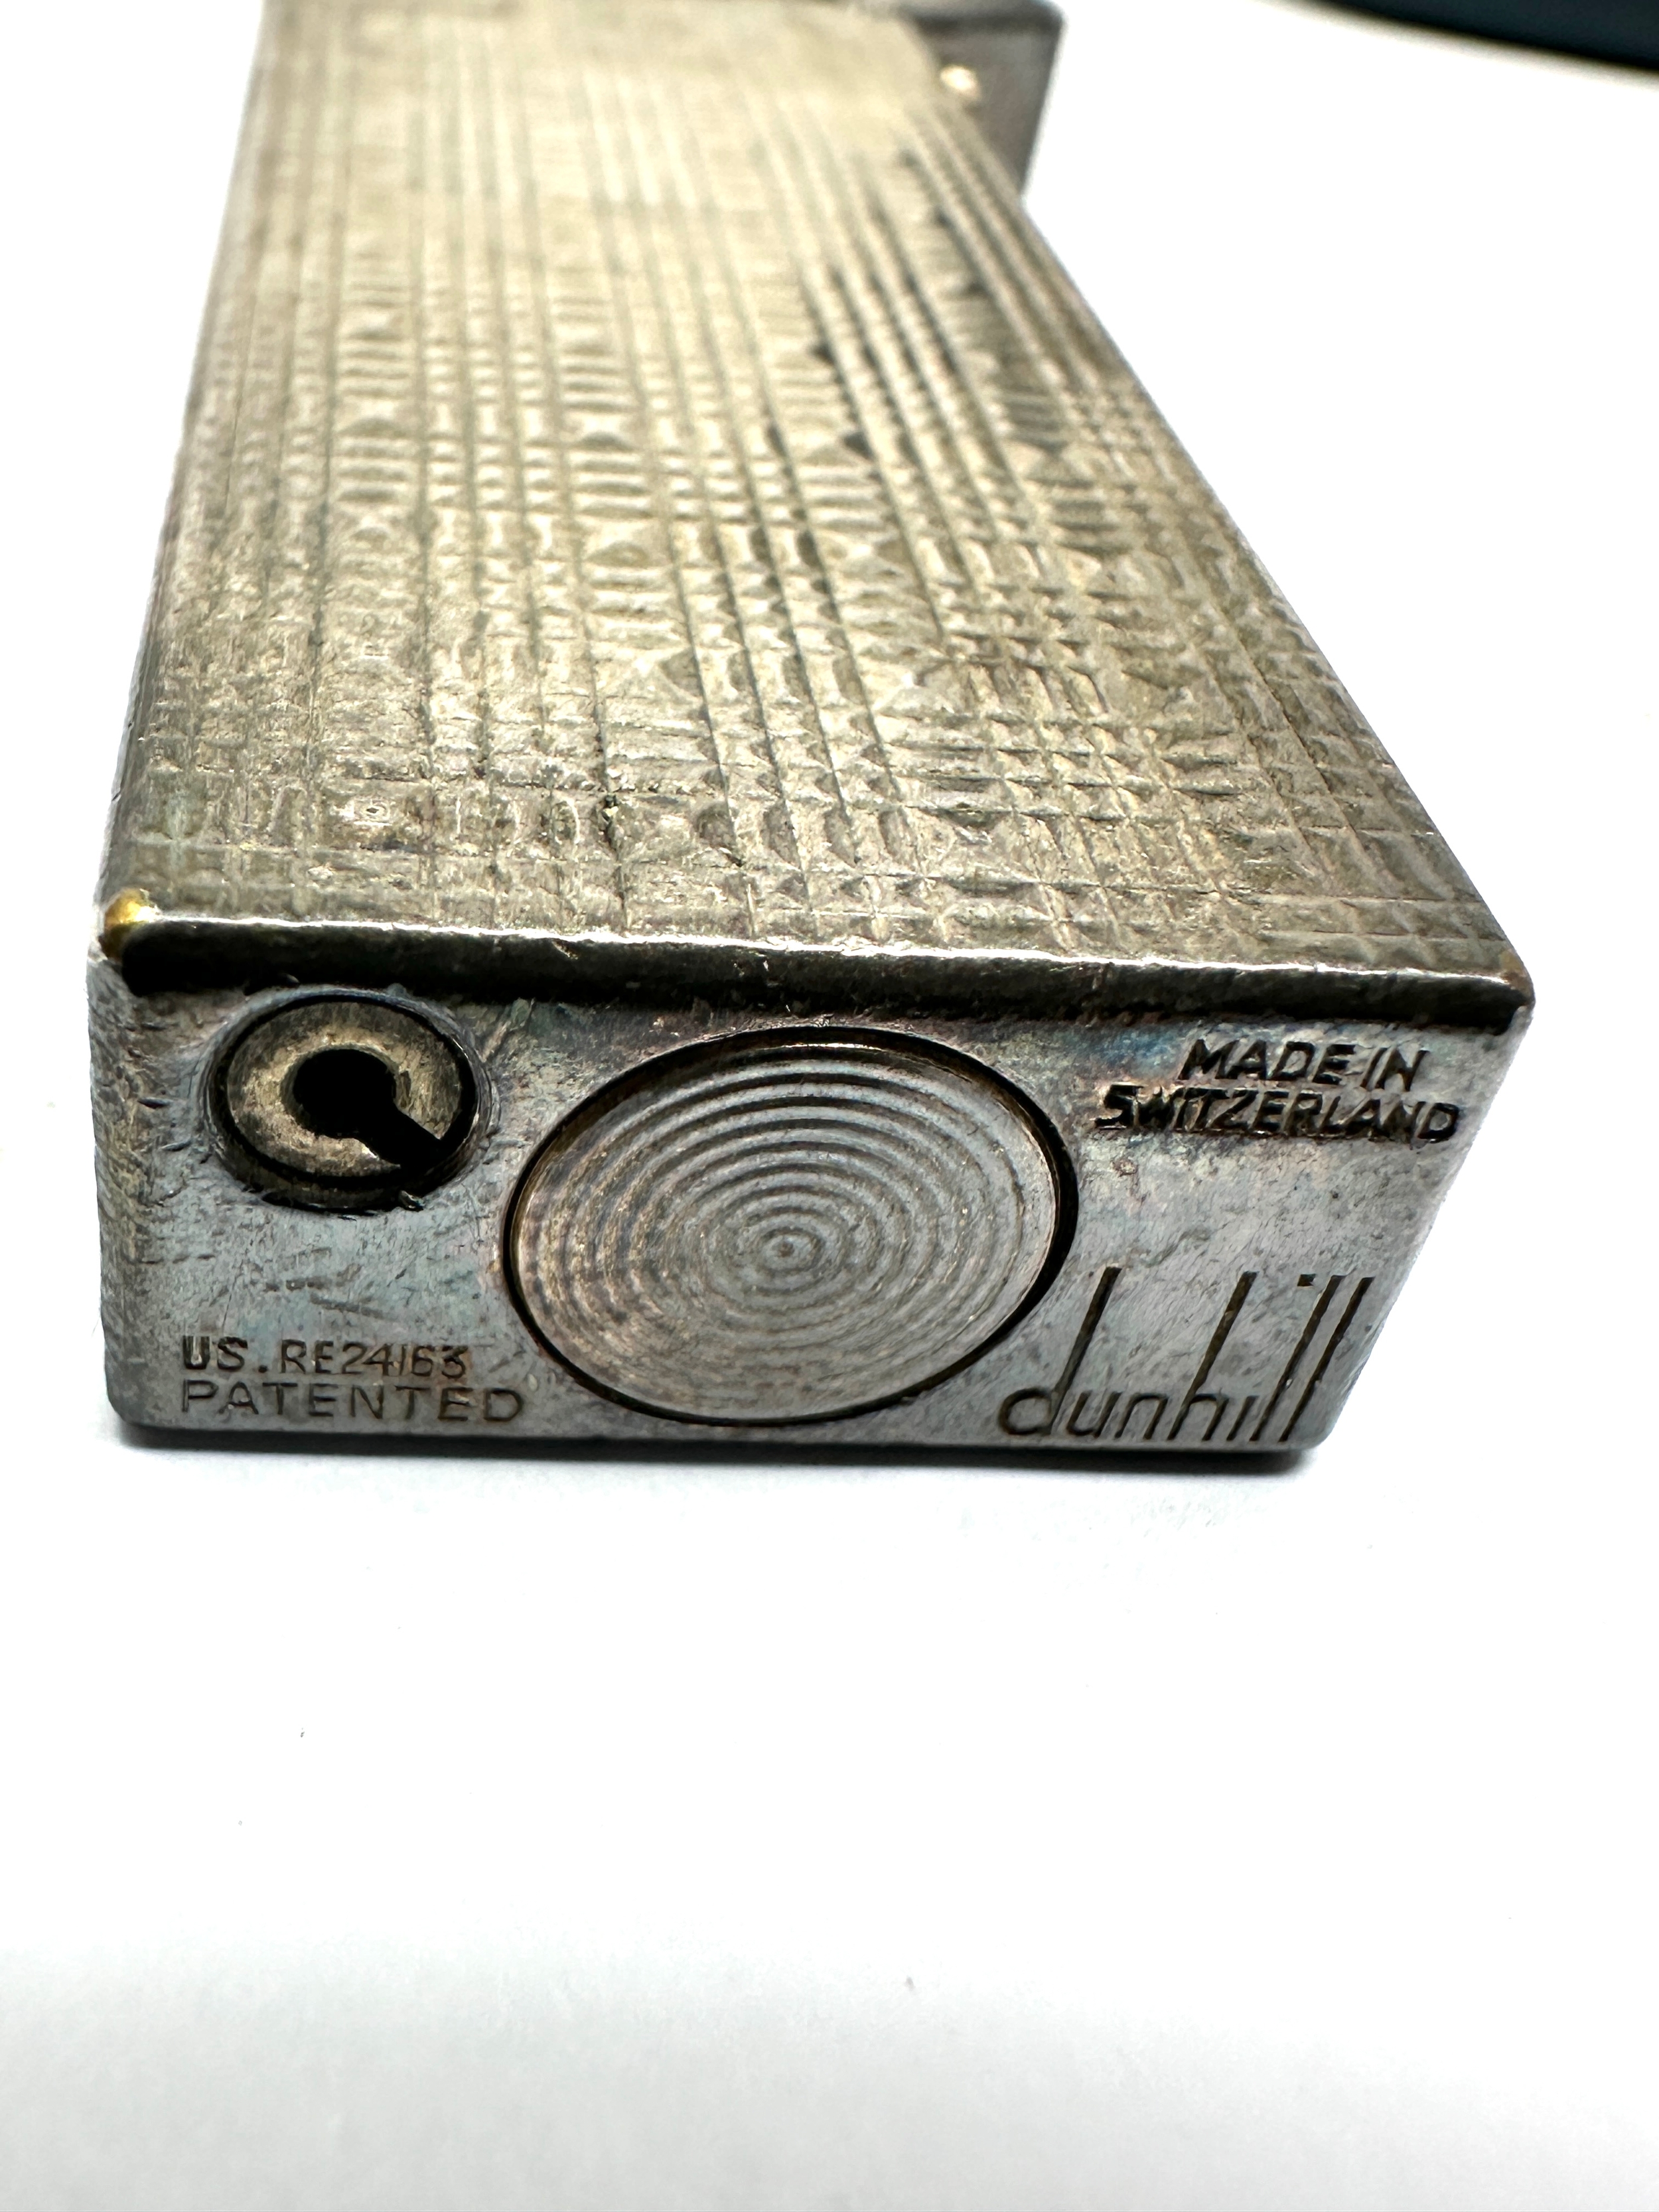 Boxed vintage Dunhill cigarette lighter - Image 4 of 4